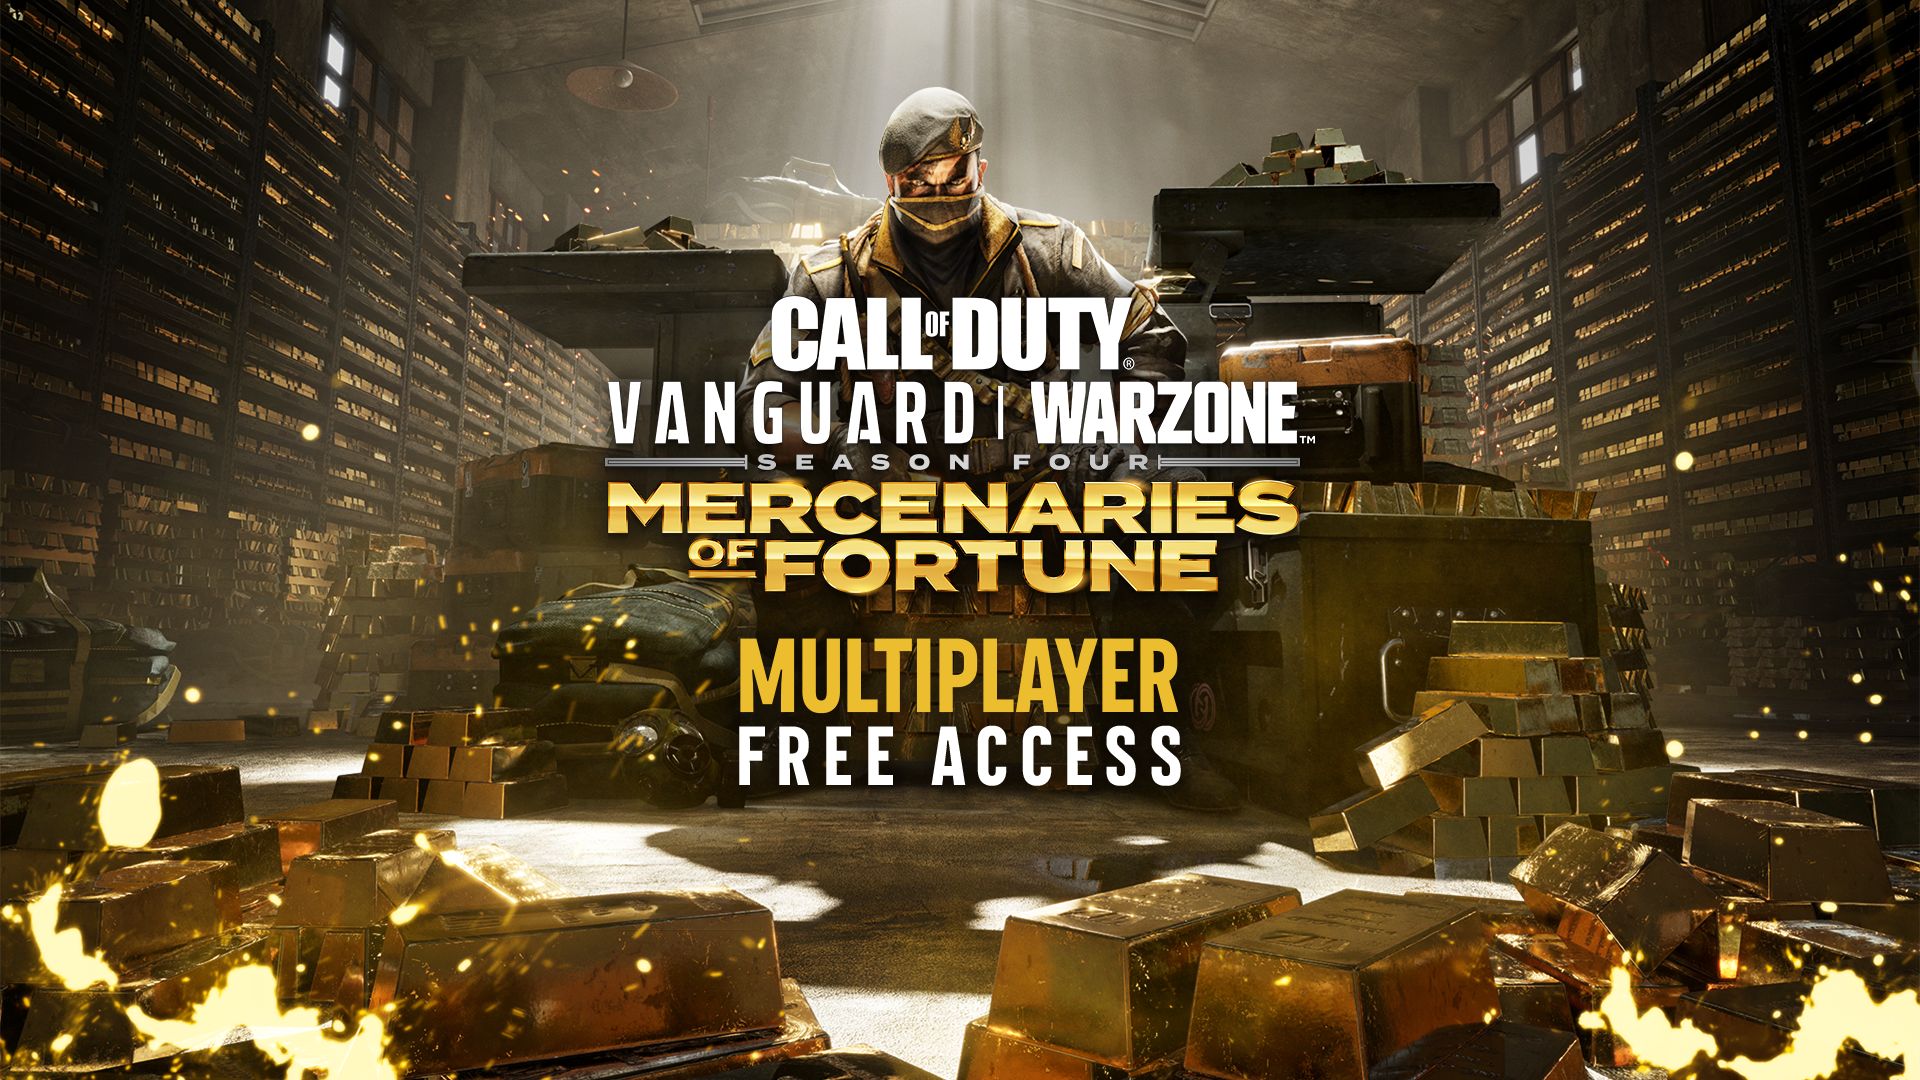 Play Call of Duty: Vanguard Free Through July 26